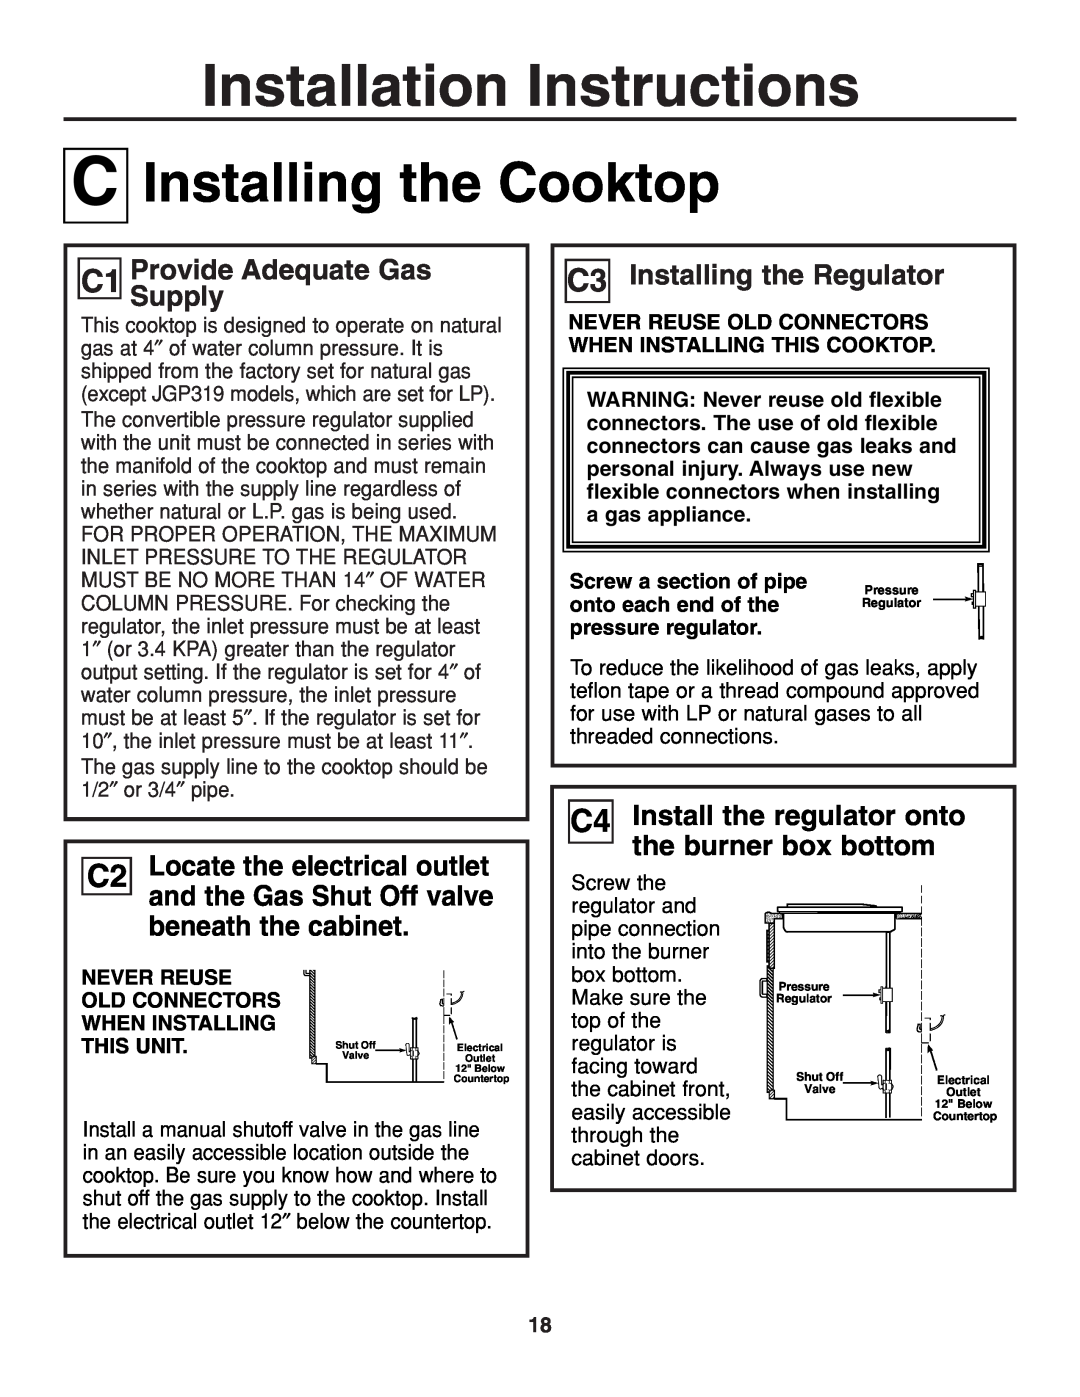 GE JGP319 CInstalling the Cooktop, C1 ProvideSupply Adequate Gas, C3 Installing the Regulator, Installation Instructions 